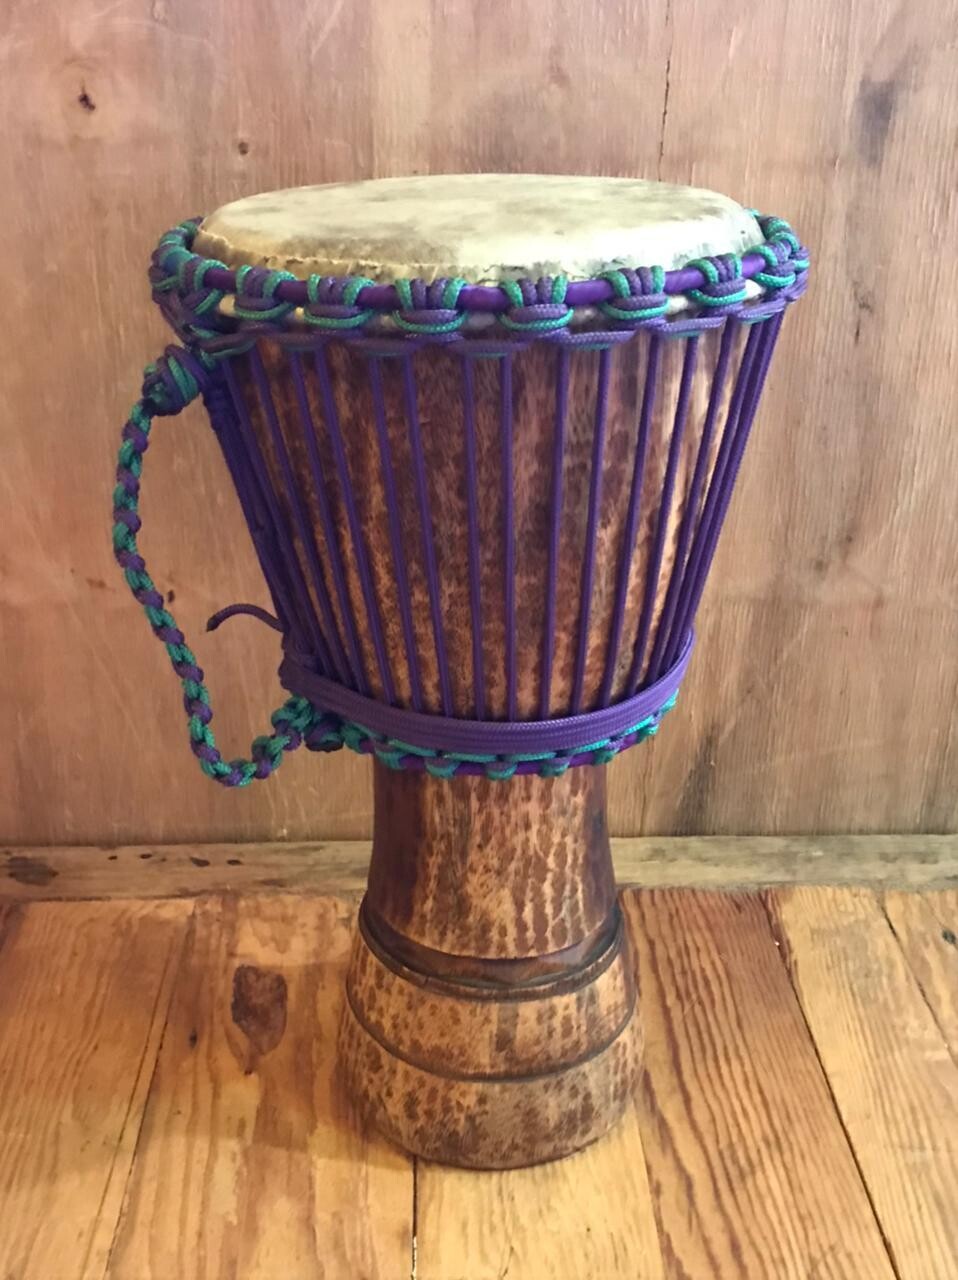 West African Ivory Coast Djembe Drum